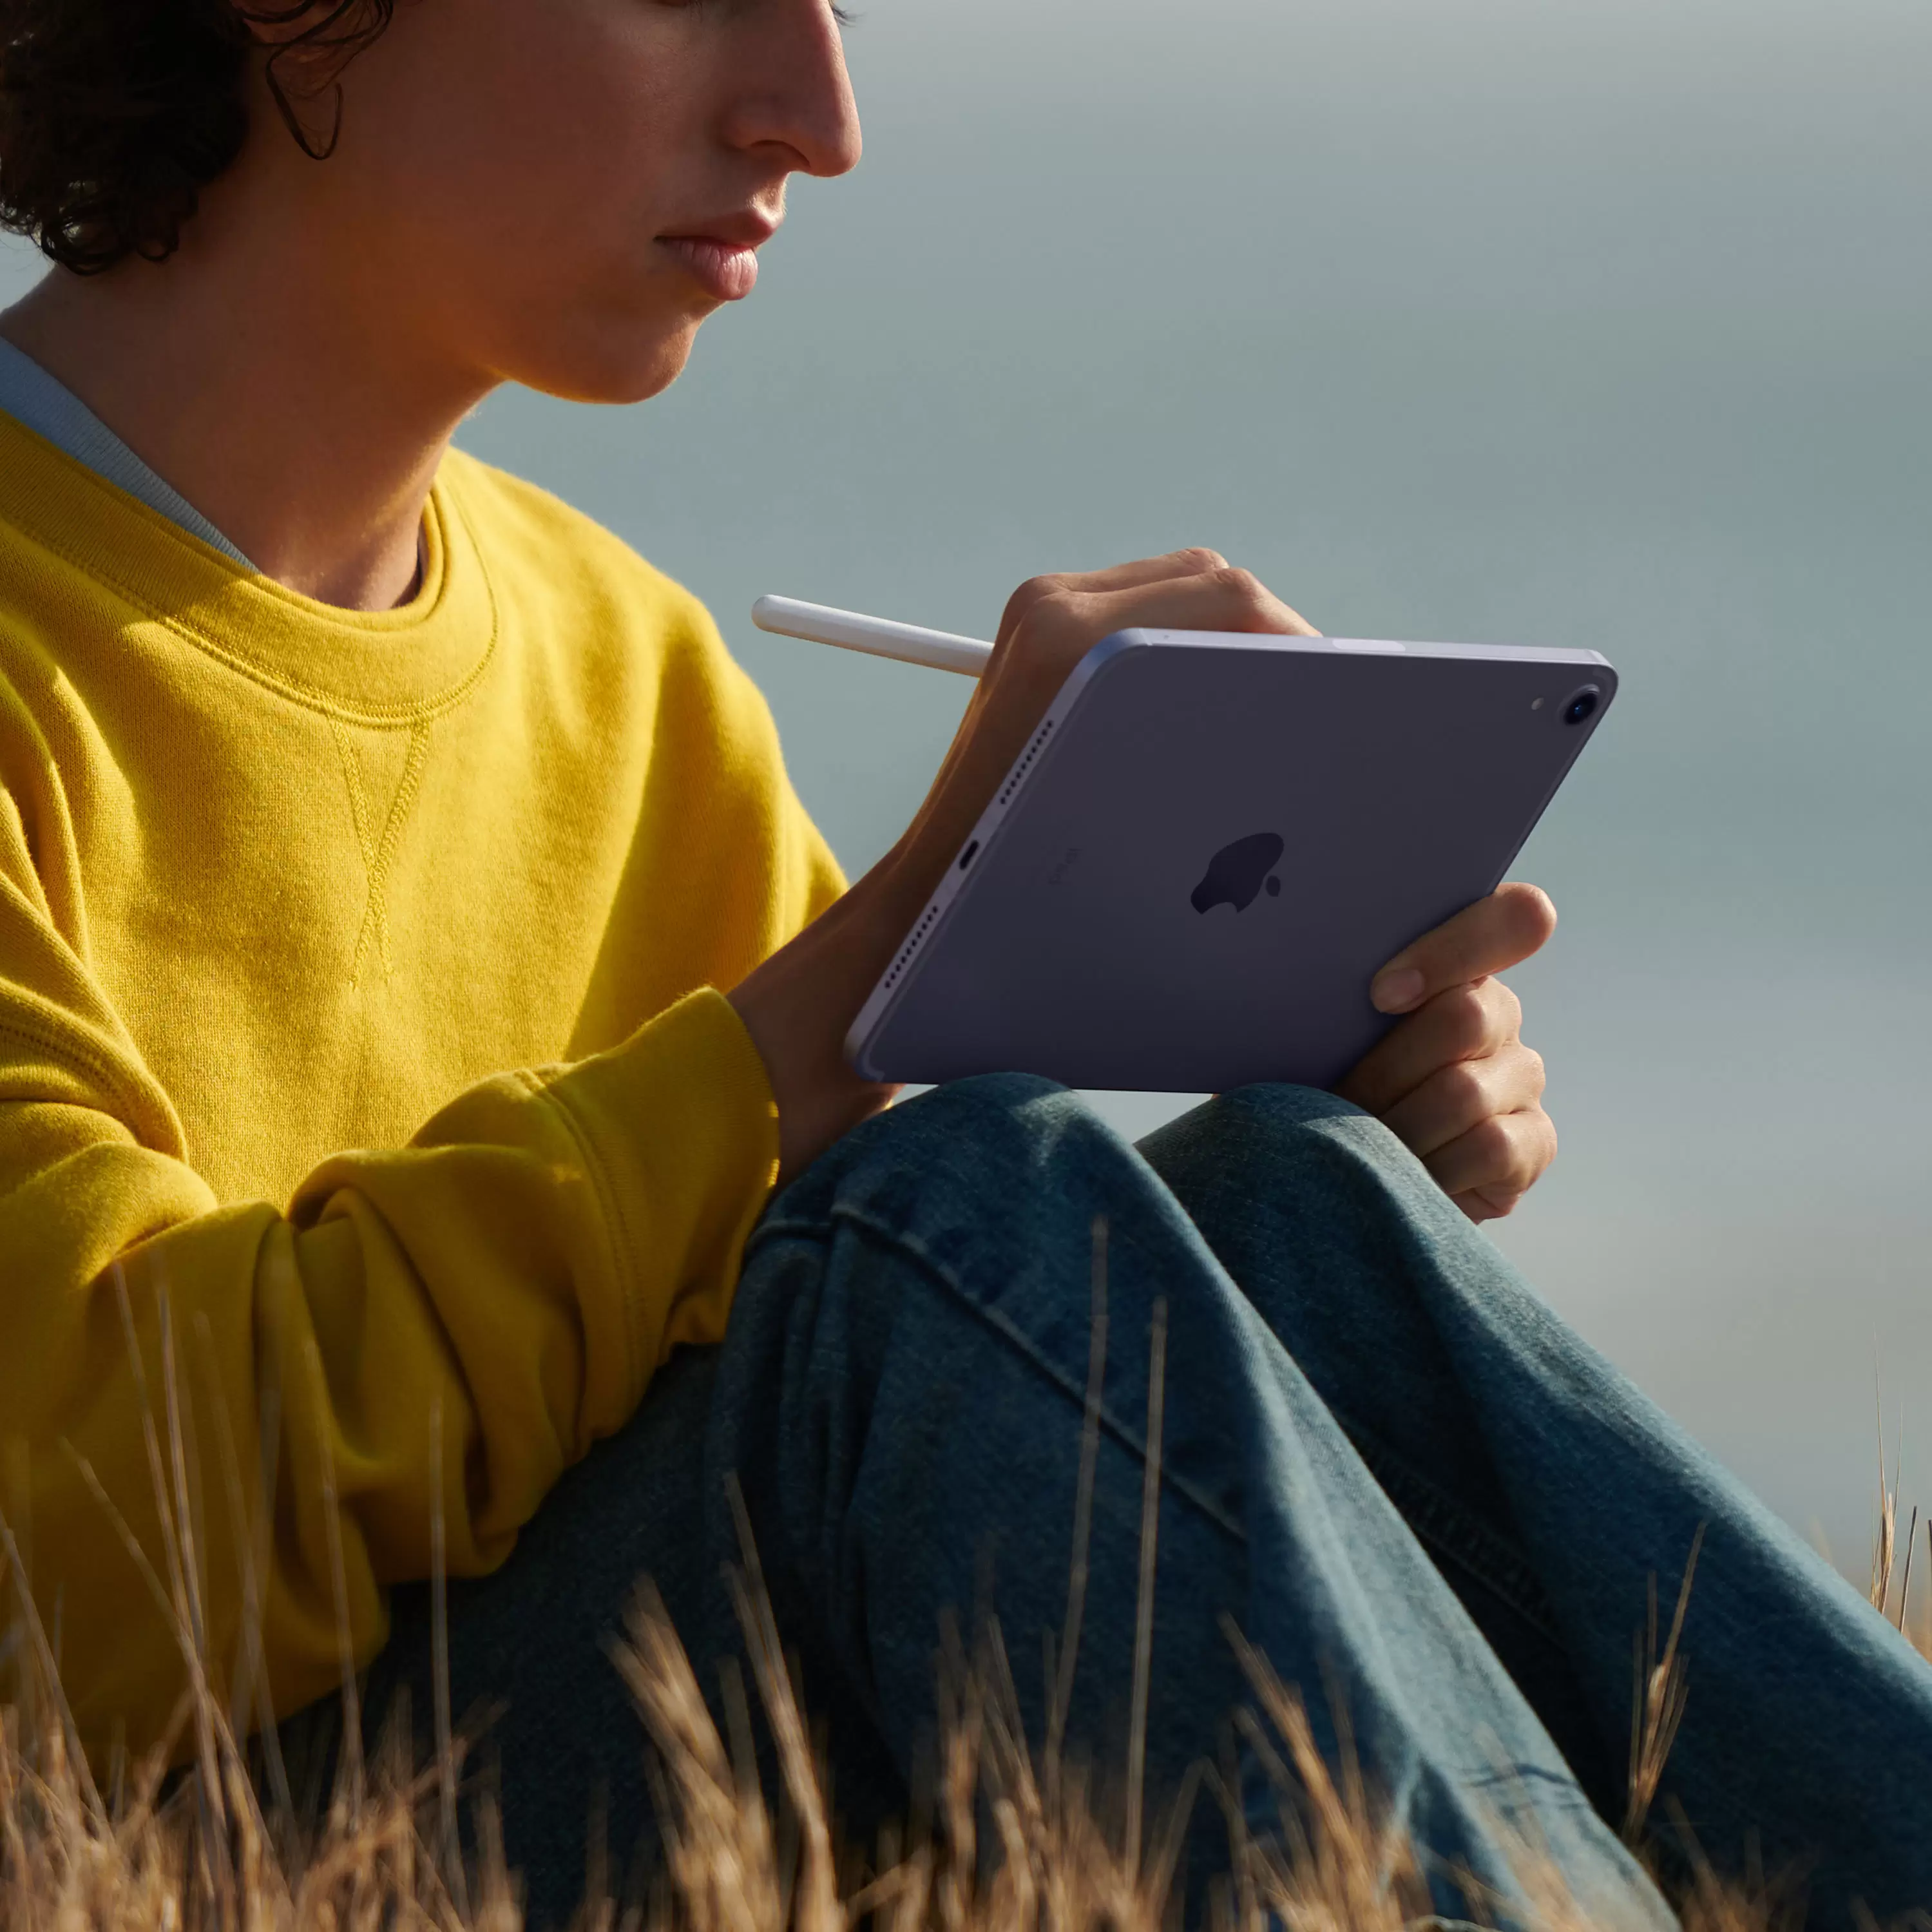 Apple iPad mini (2021) Wi-Fi + Cellular 64GB (фиолетовый)